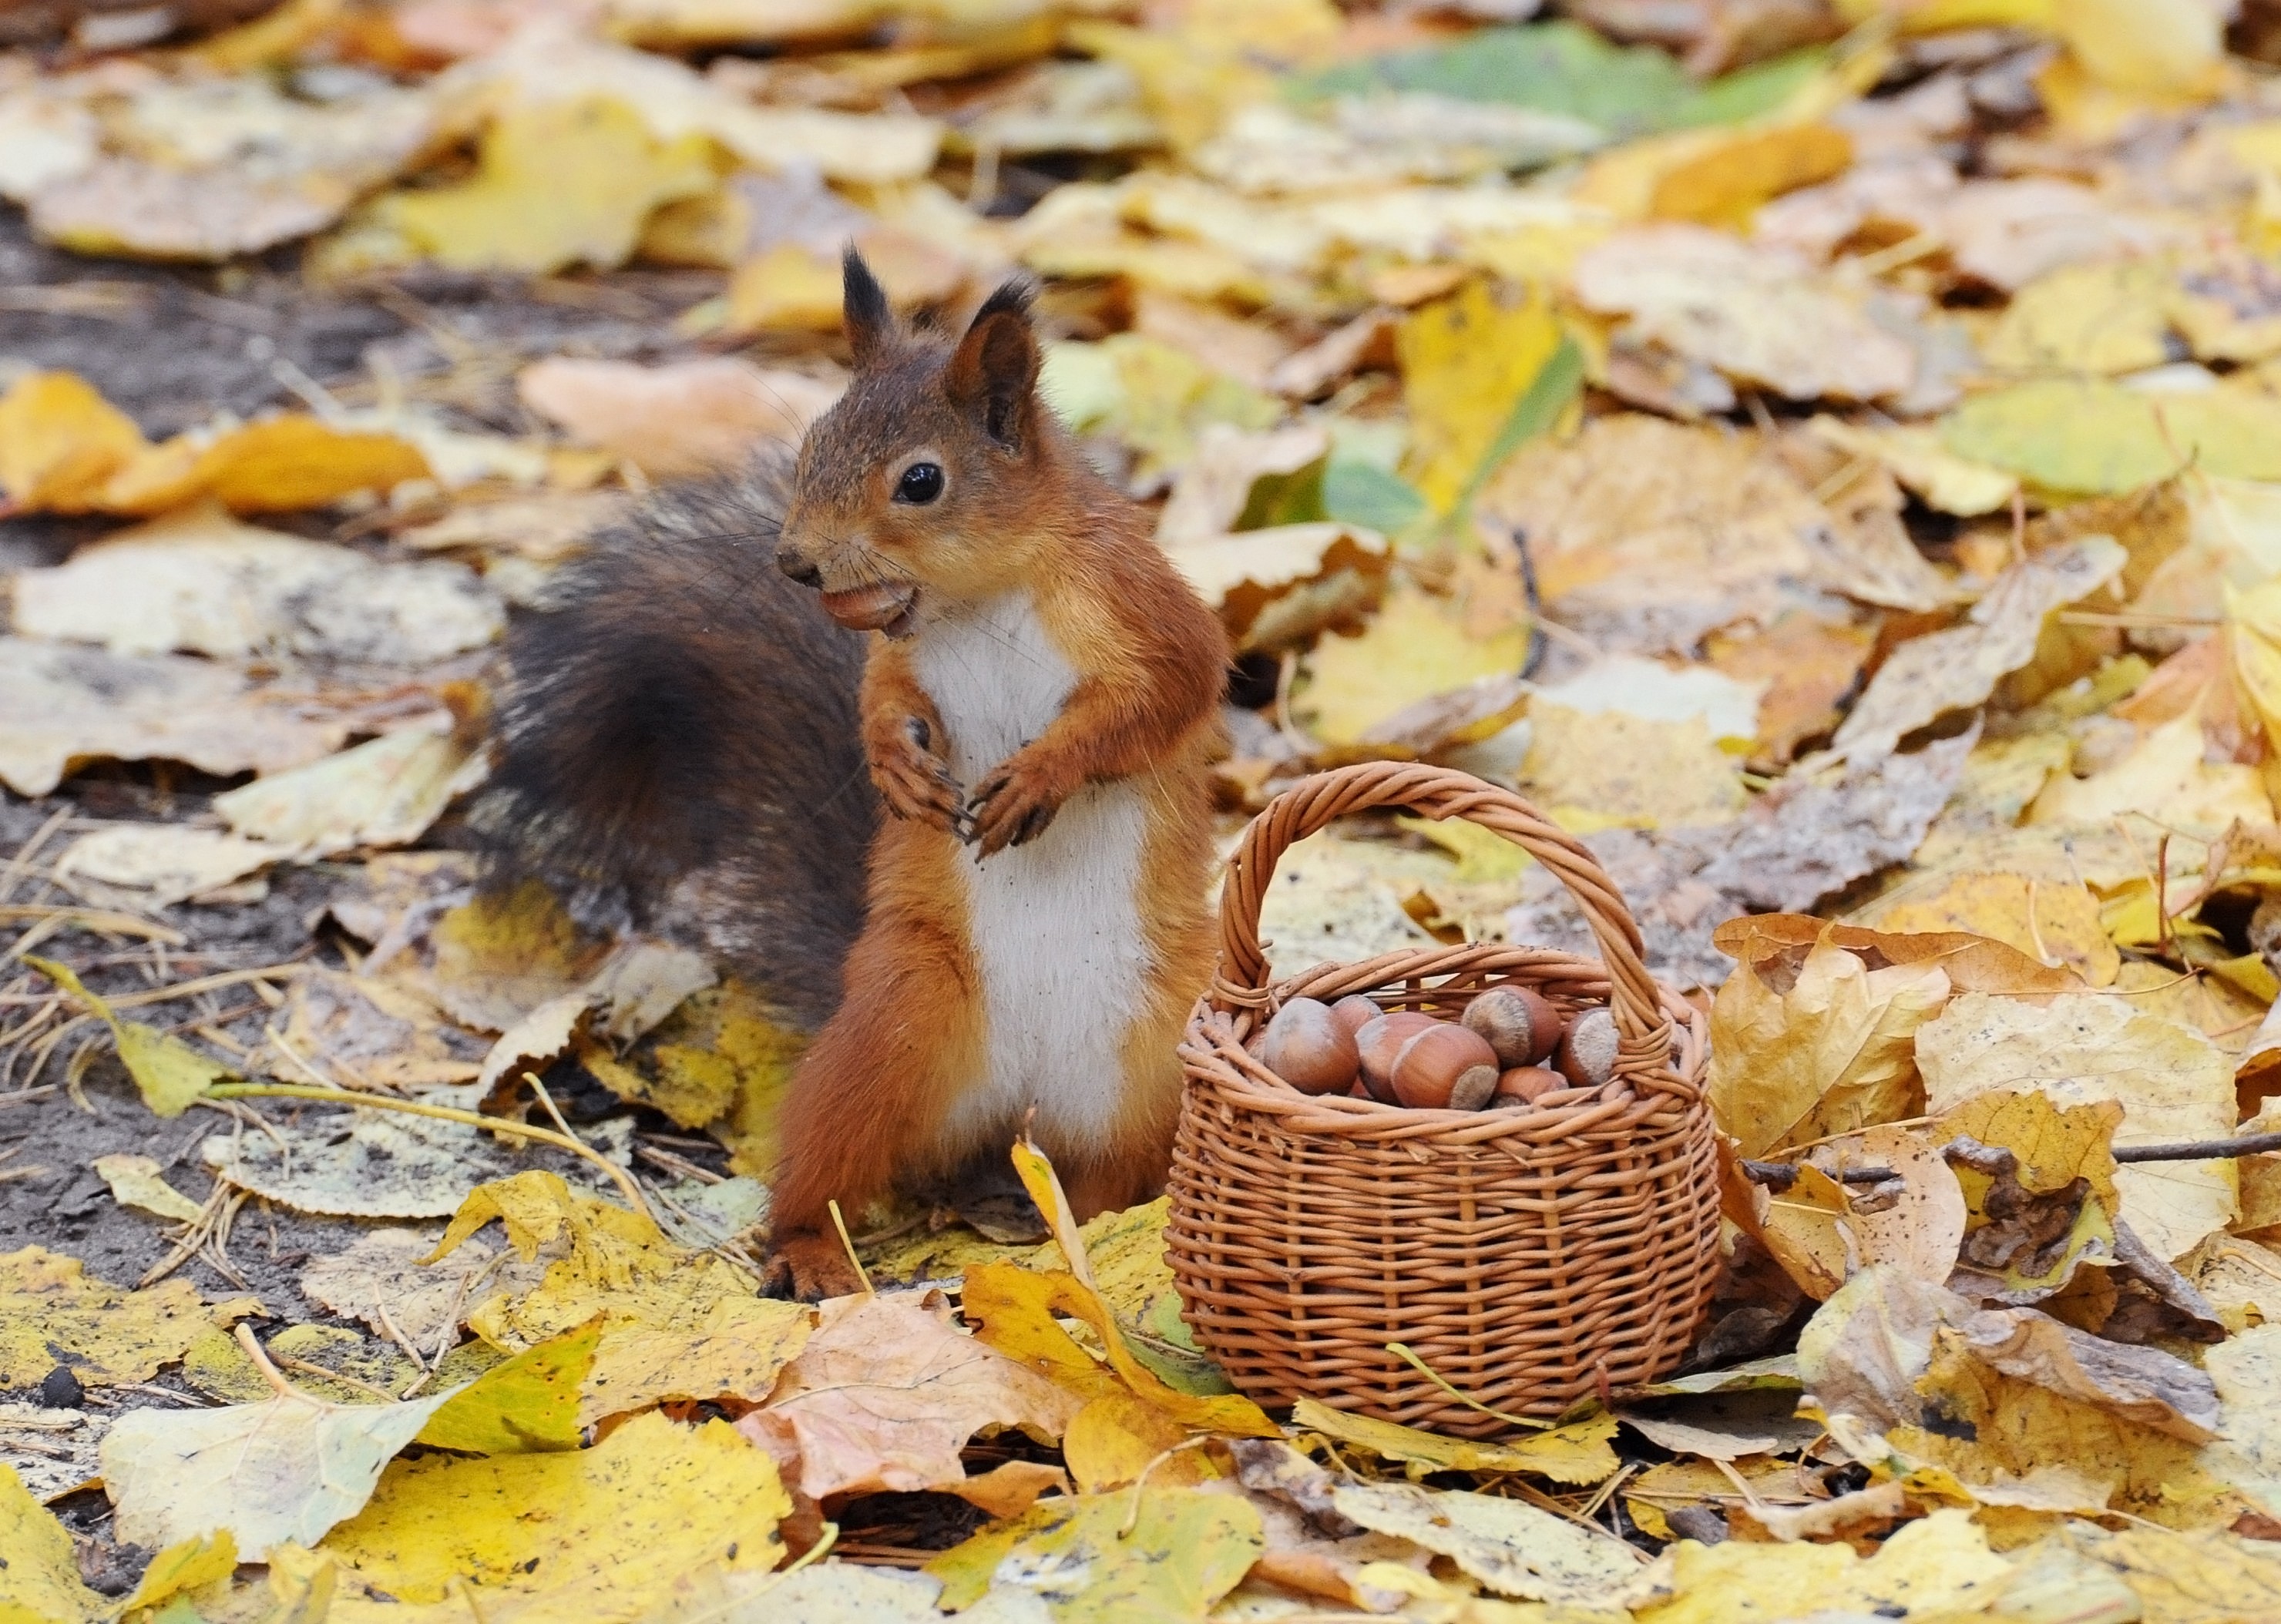 General 2960x2108 animals nature baskets acorns squirrel leaves nuts food fallen leaves mammals closeup